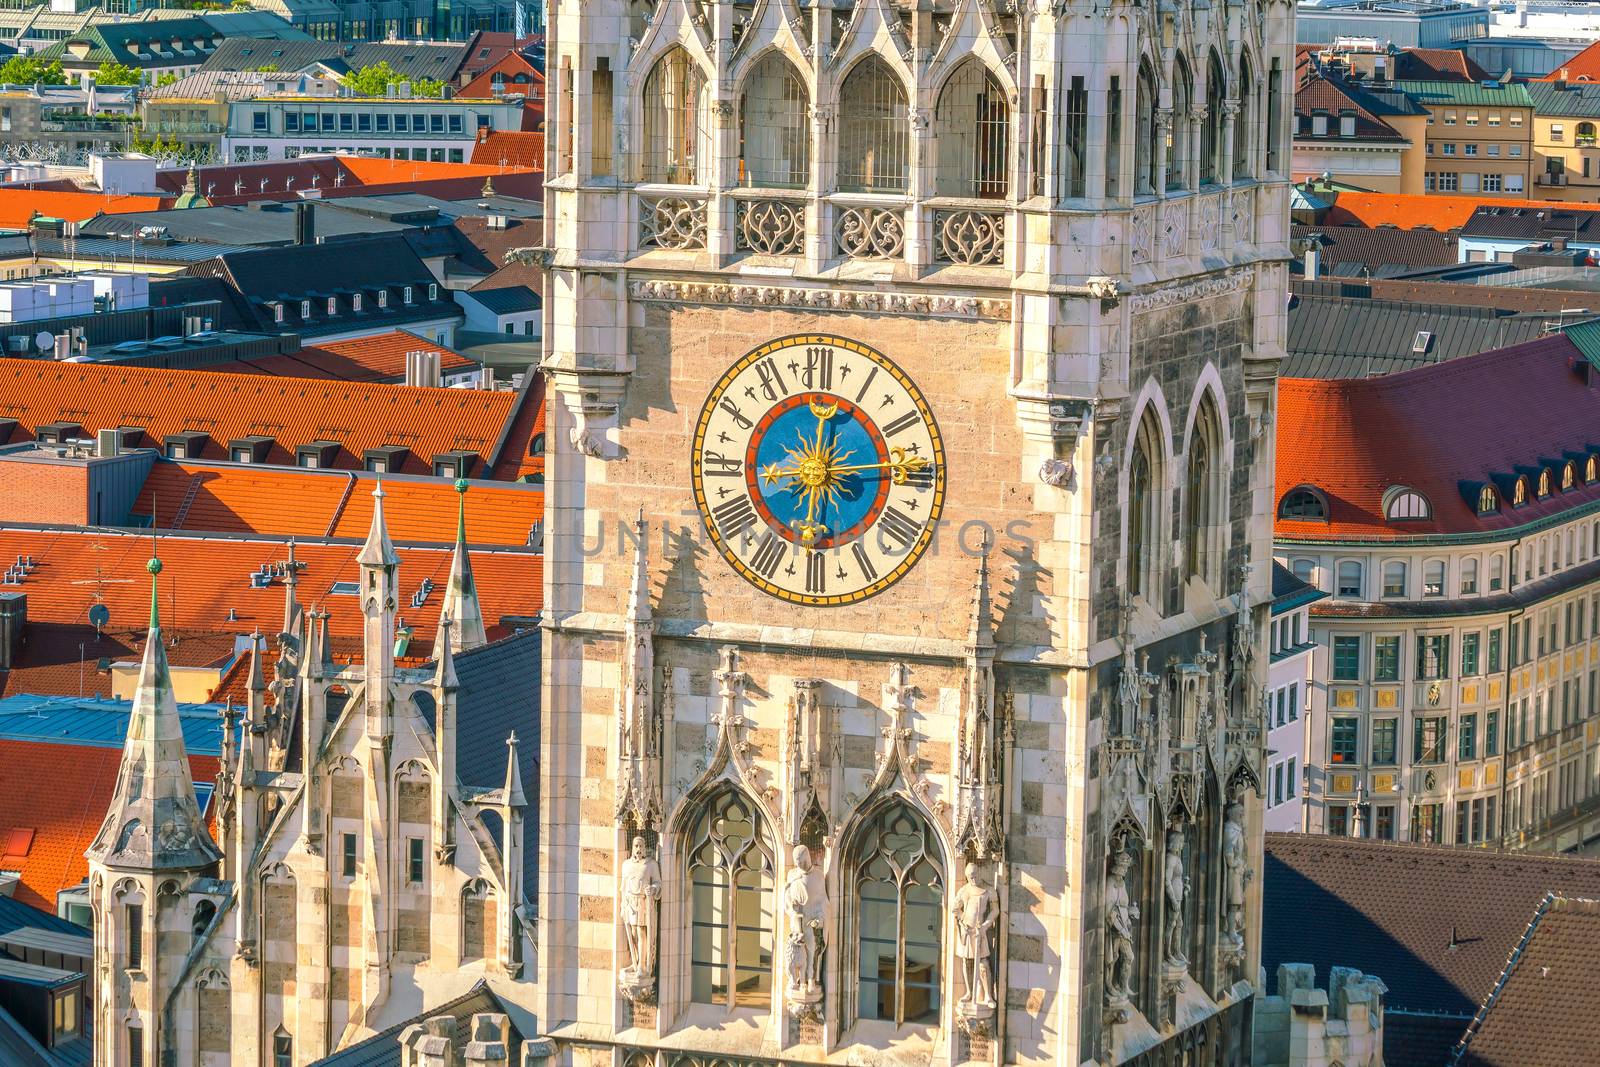 Marienplatz City Hall Tower Clock In Germany